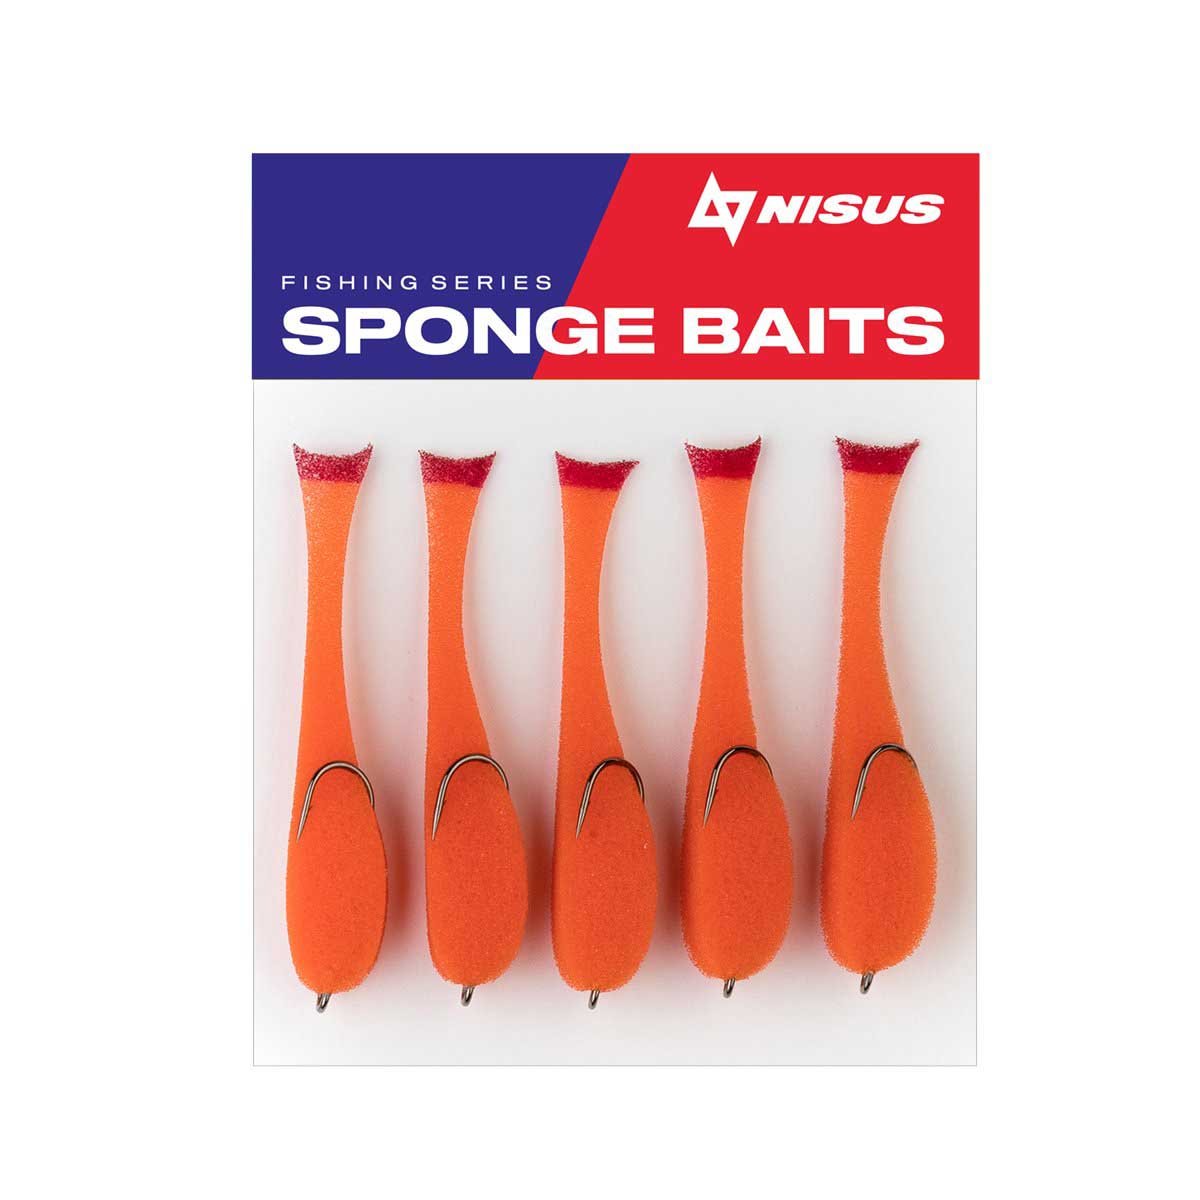 Nisus 3.5 inch Sponge Bait Fishing Lure, pack of 5